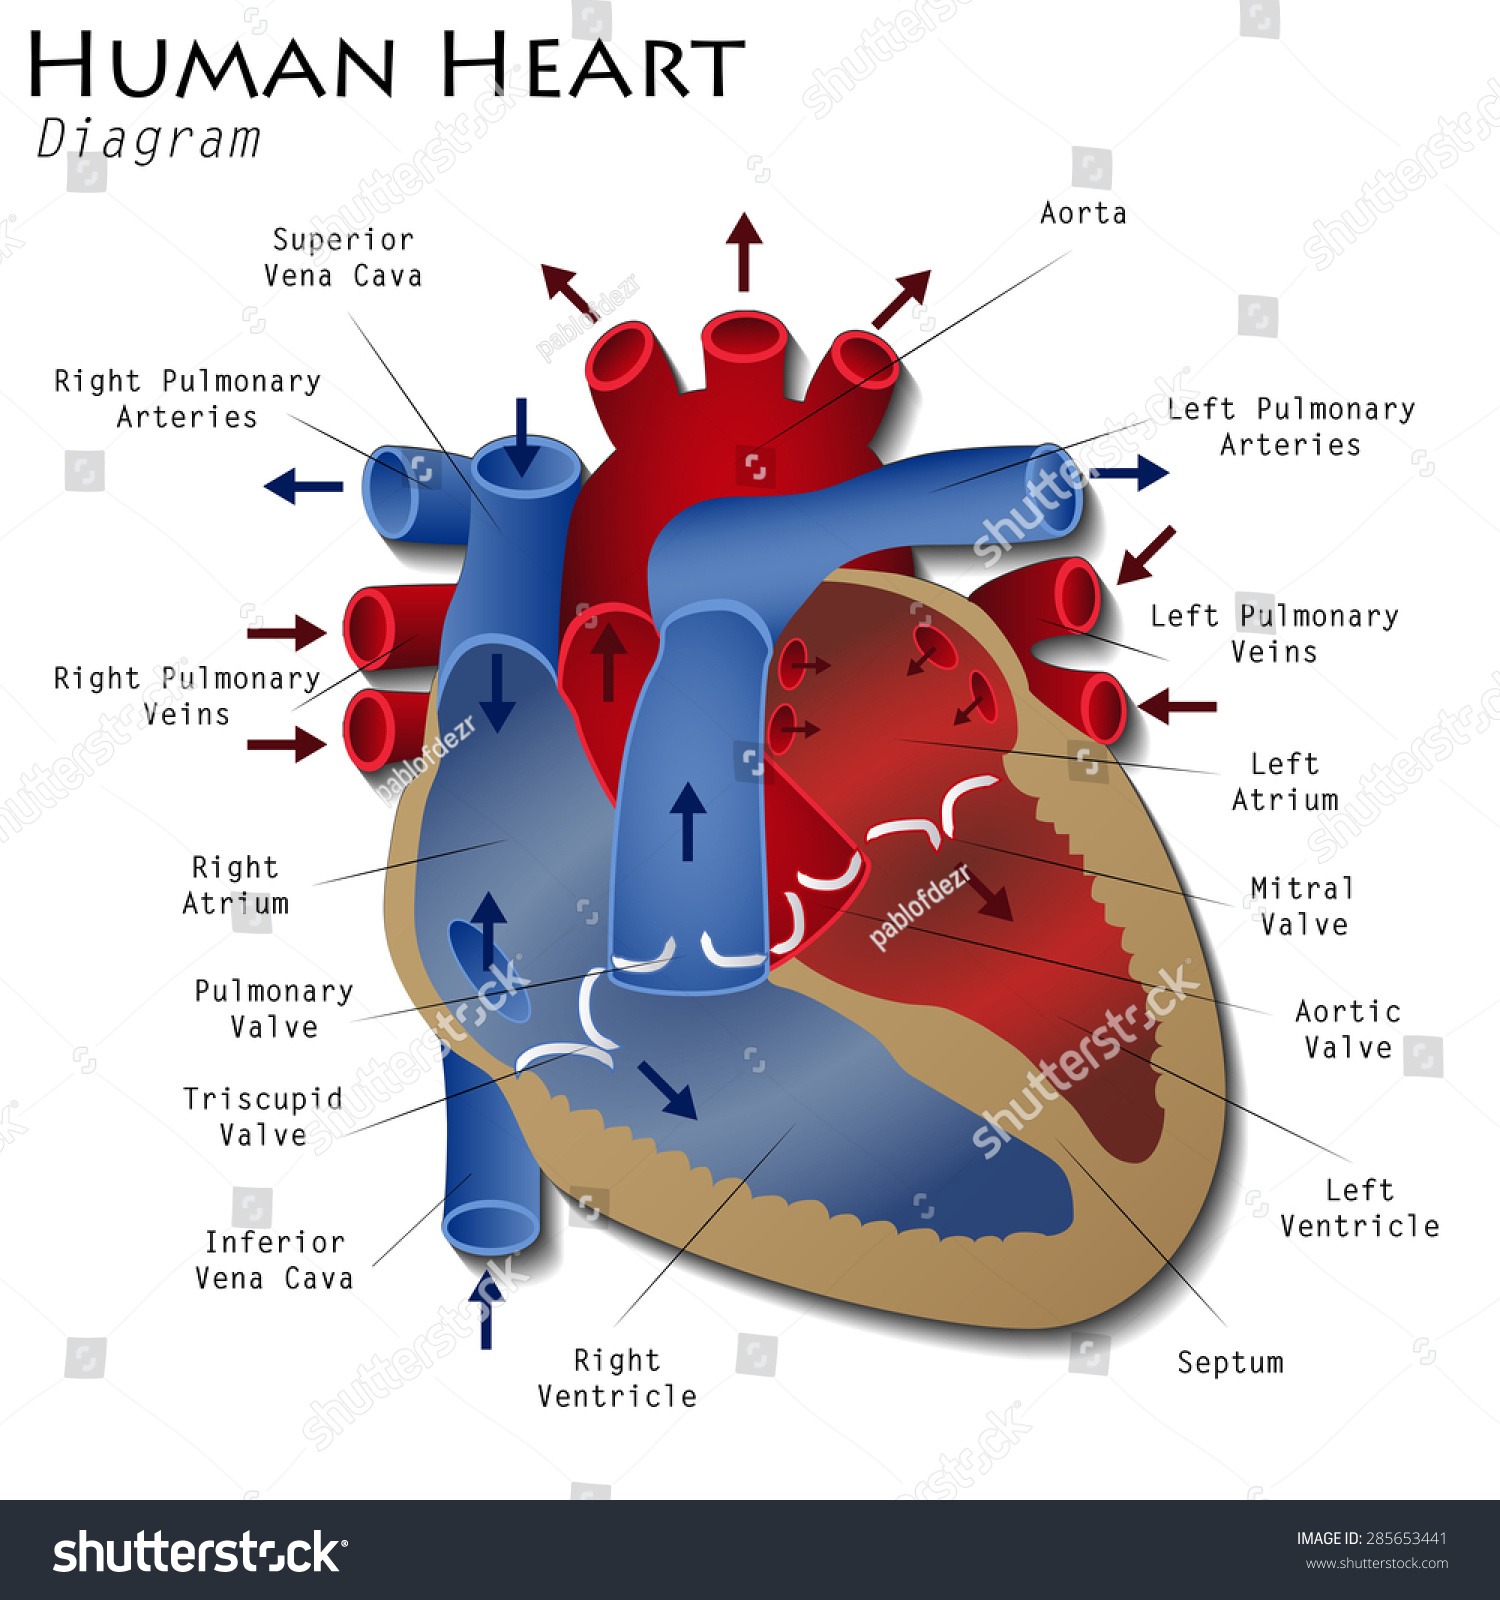 Human Heart Diagram Stock Vector (Royalty Free) 285653441 - Shutterstock